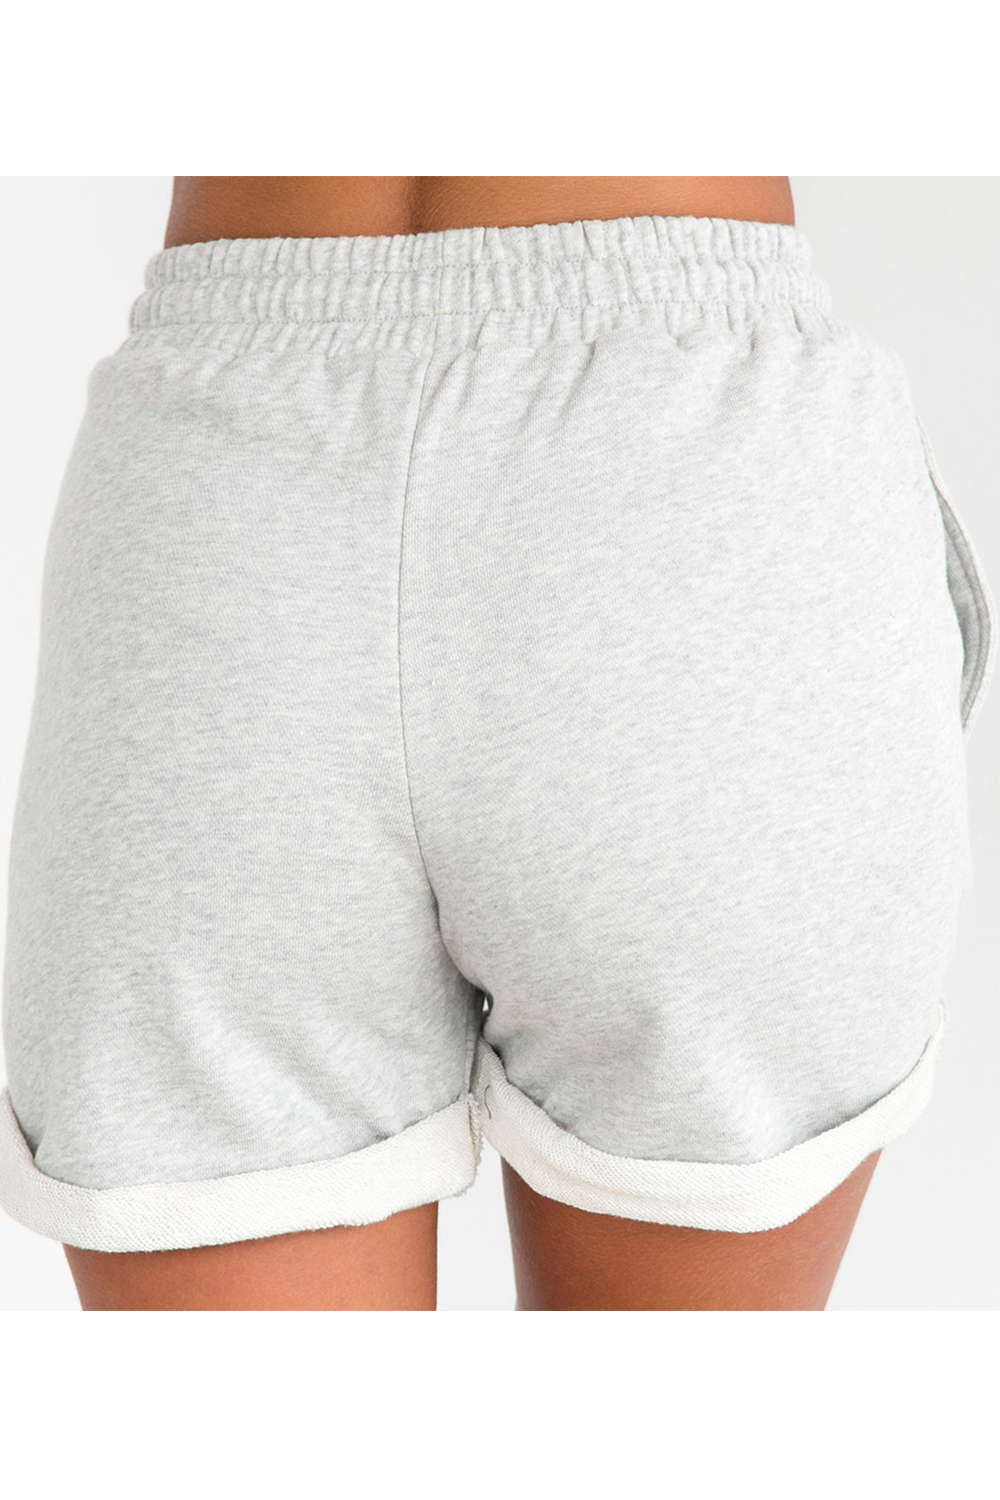 Iyasson Women's Cotton Stretch Activewear Lounge Shorts